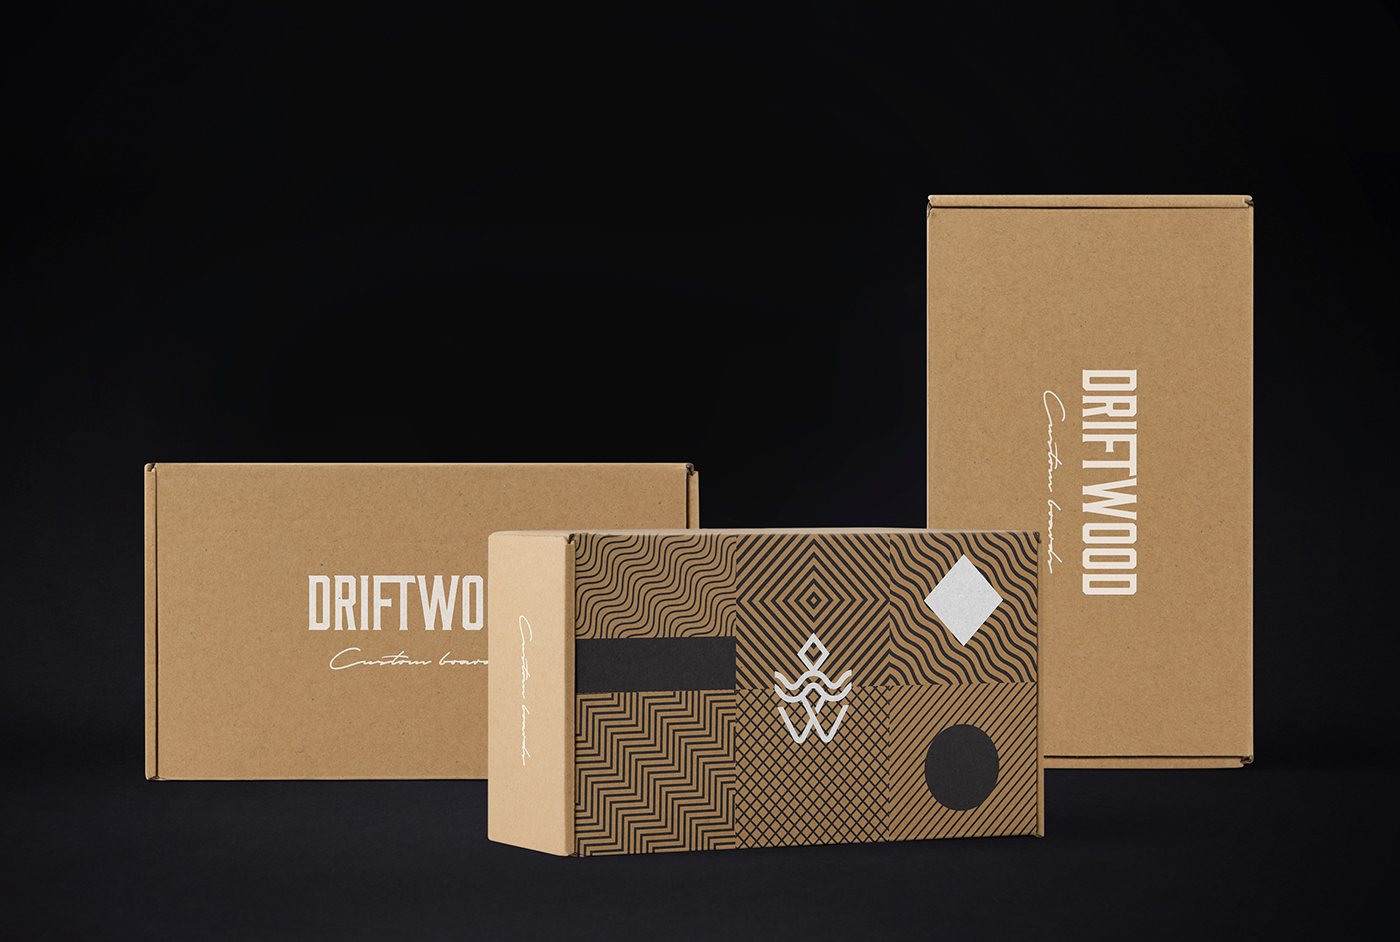 driftwood pedalboards wordmark brands Packaging logo Patterns identity graphic system Guadalajara